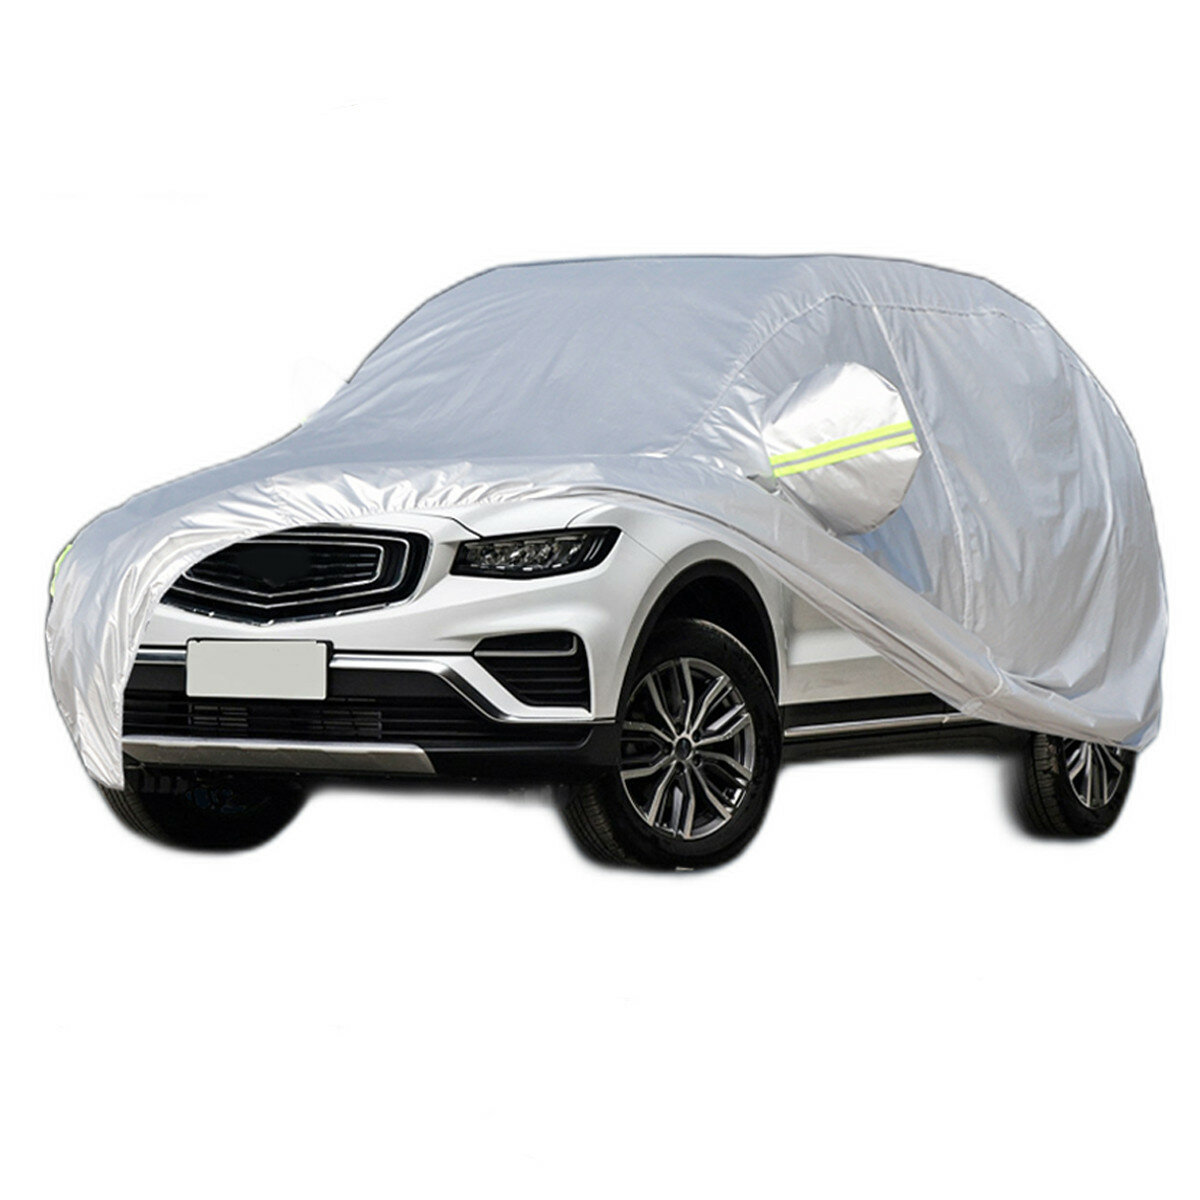 190T Full Car Cover Waterproof Dust-proof UV Resistant w/ Side Zipper For Cars